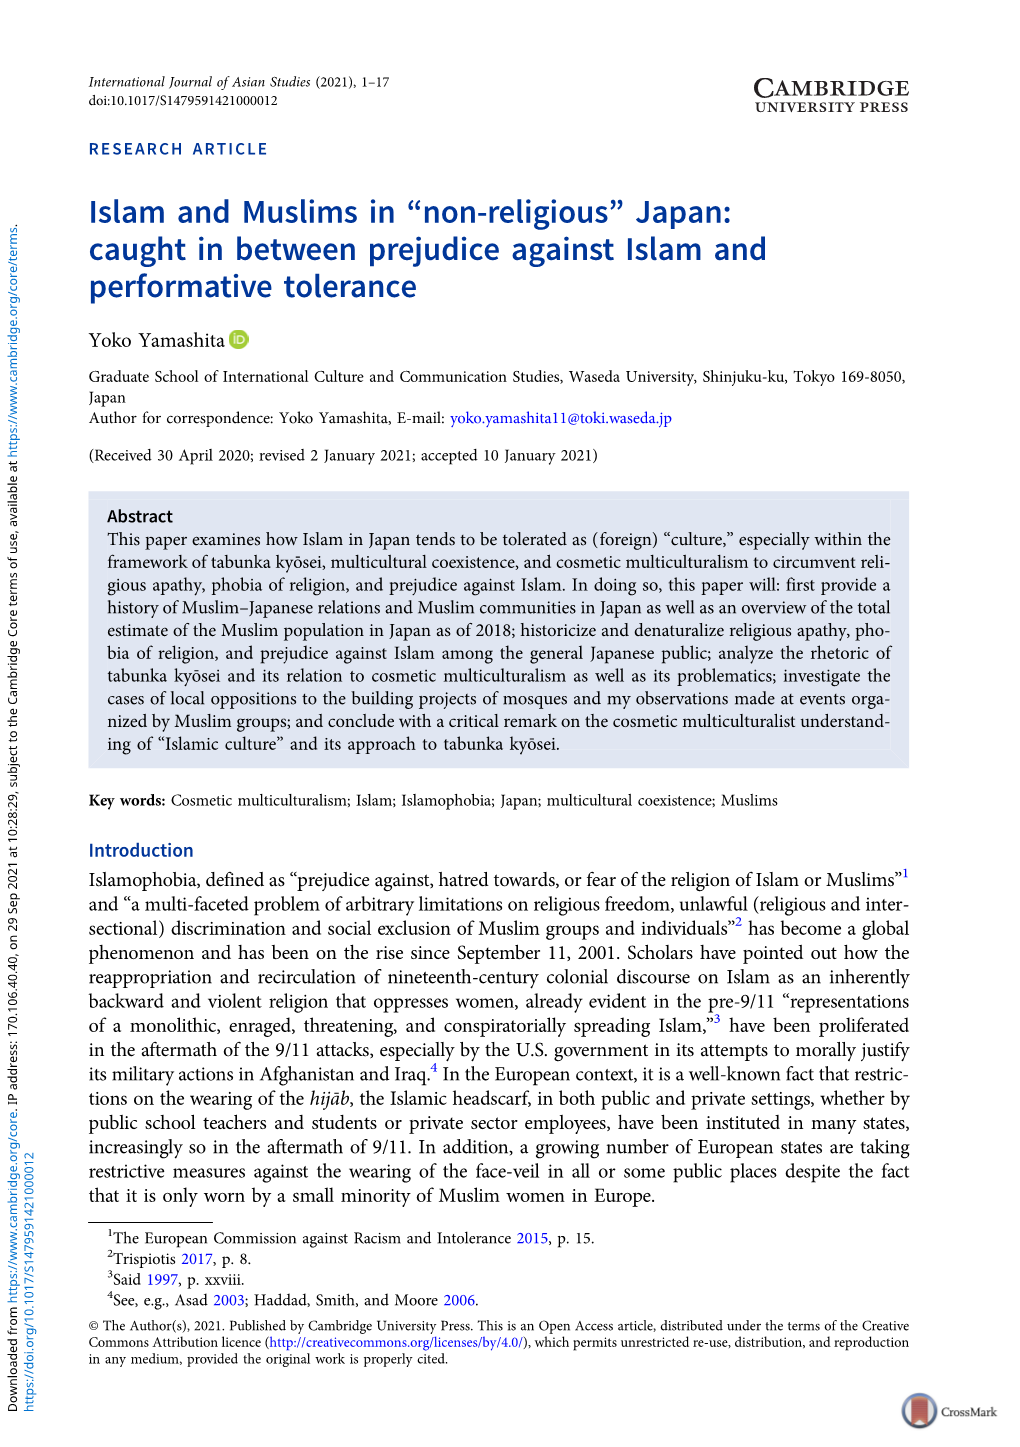 Islam and Muslims in “Non-Religious” Japan: Caught in Between Prejudice Against Islam